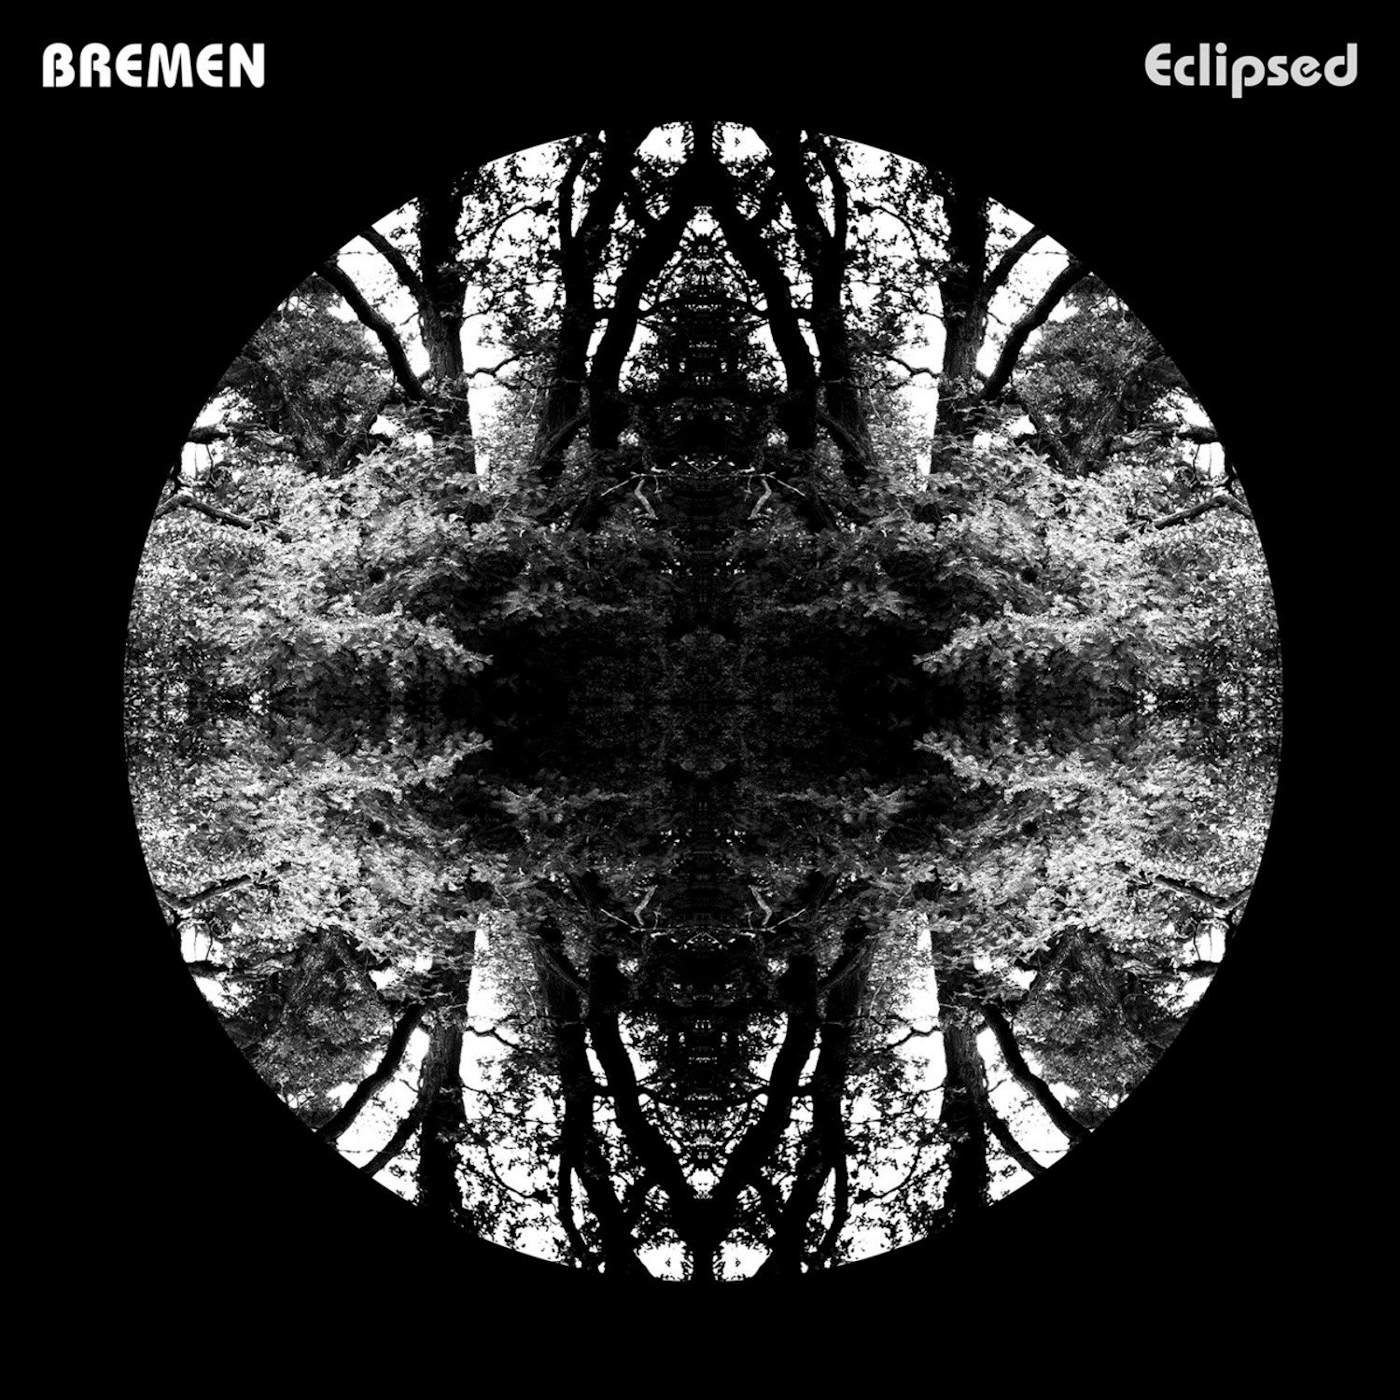 Bremen 'Eclipsed' Vinyl 2xLP Vinyl Record